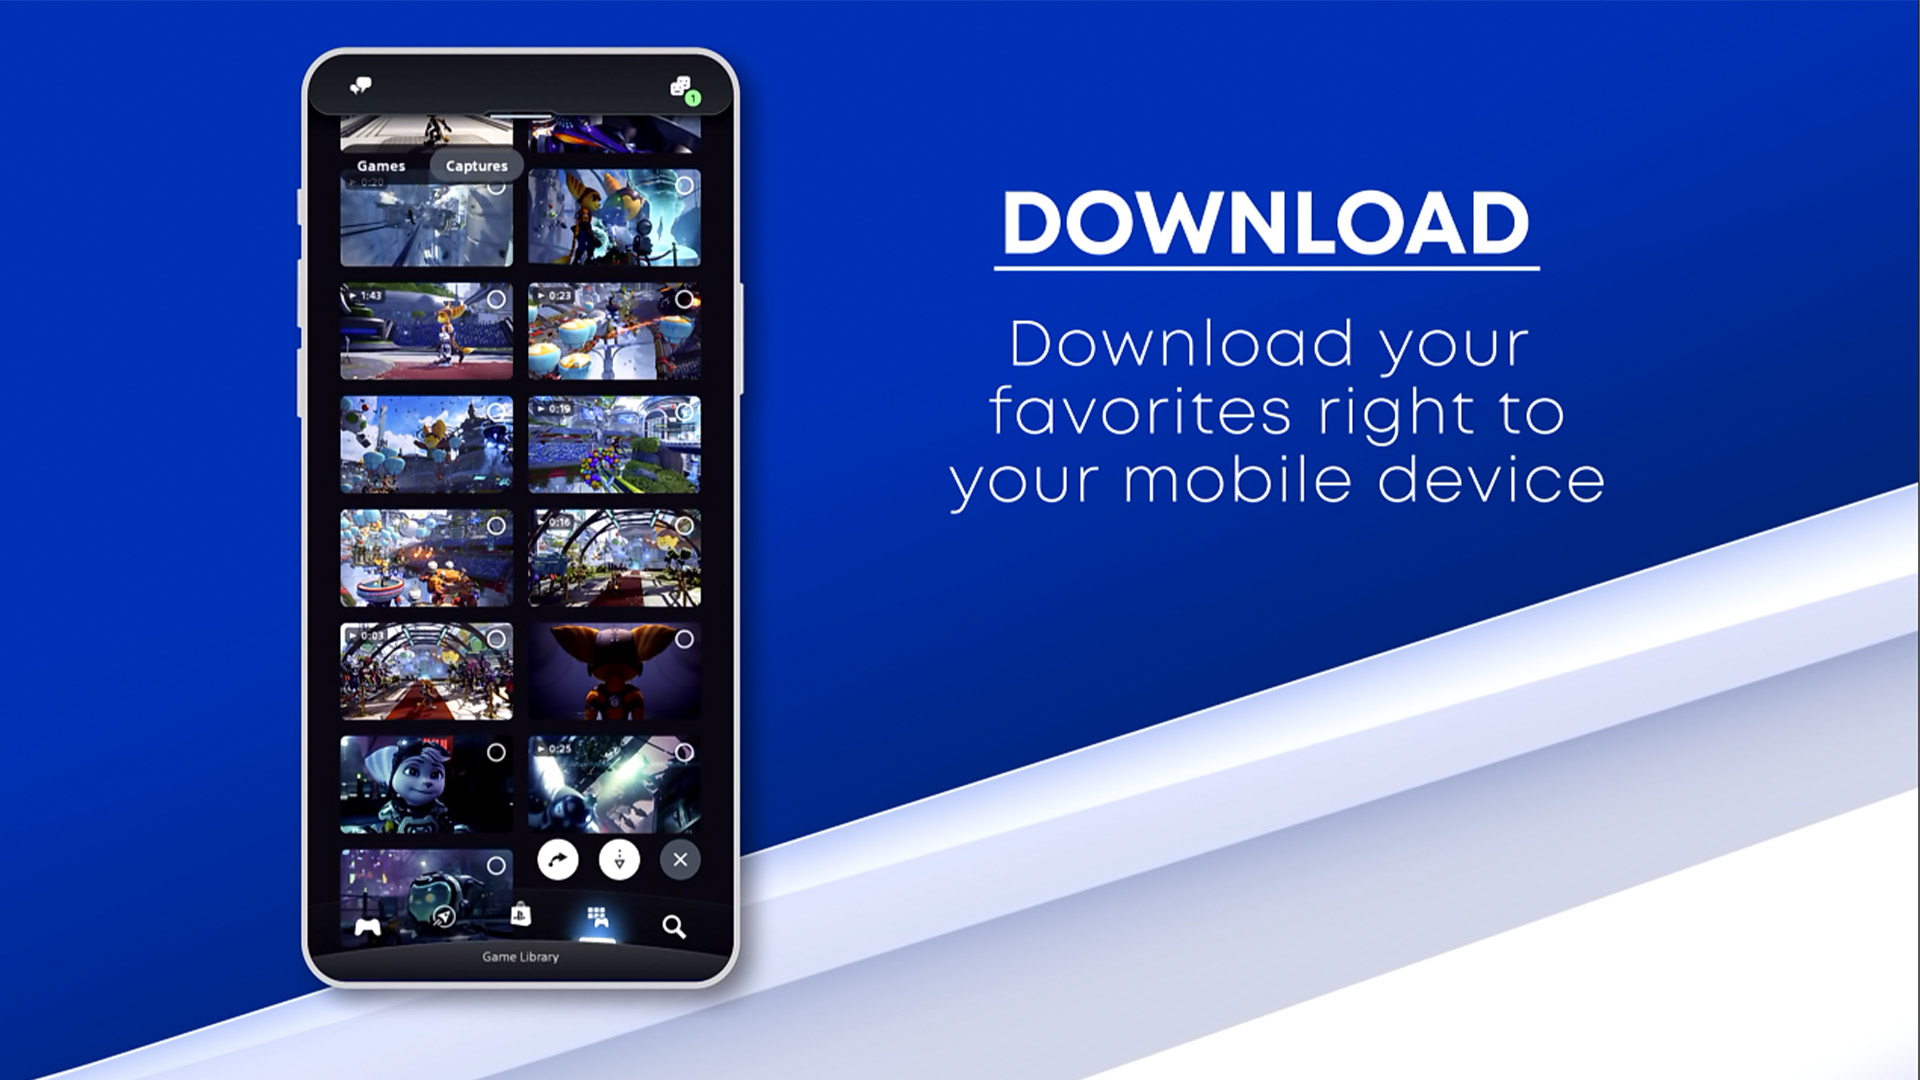 PS App Game Capture Downloads